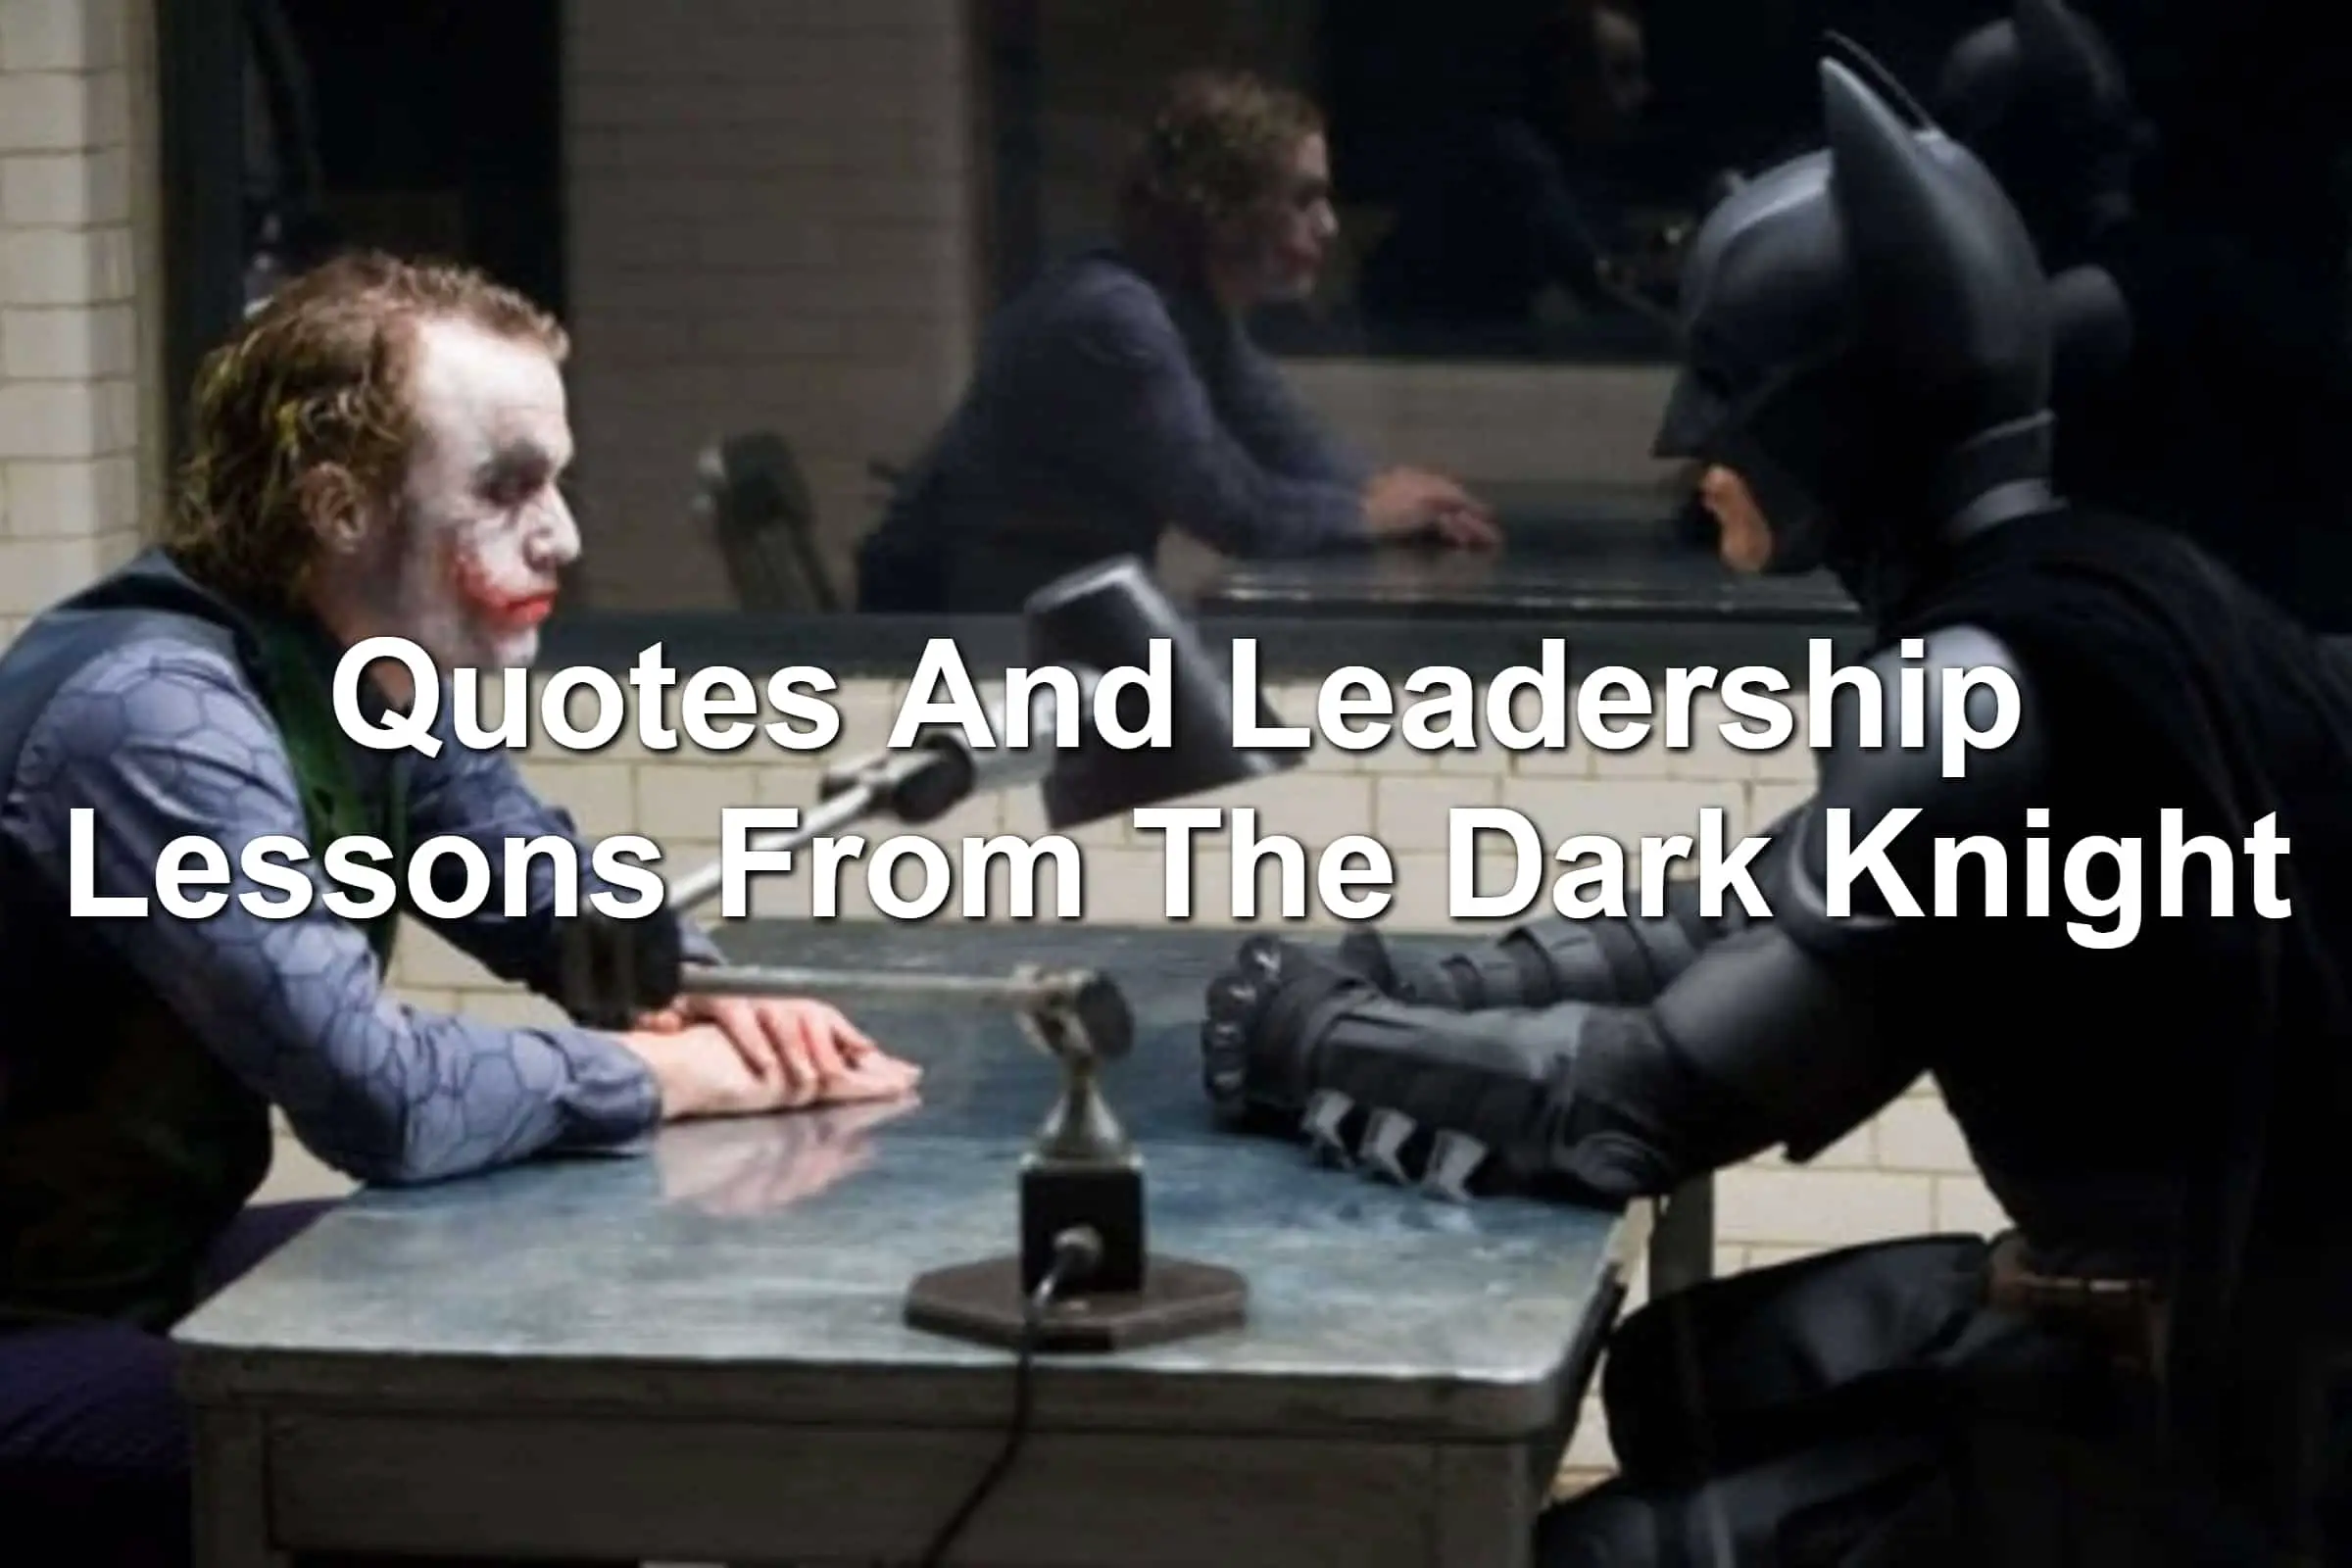 Christian Bale as Batman and Heath Ledger as the Joker in The Dark Knight